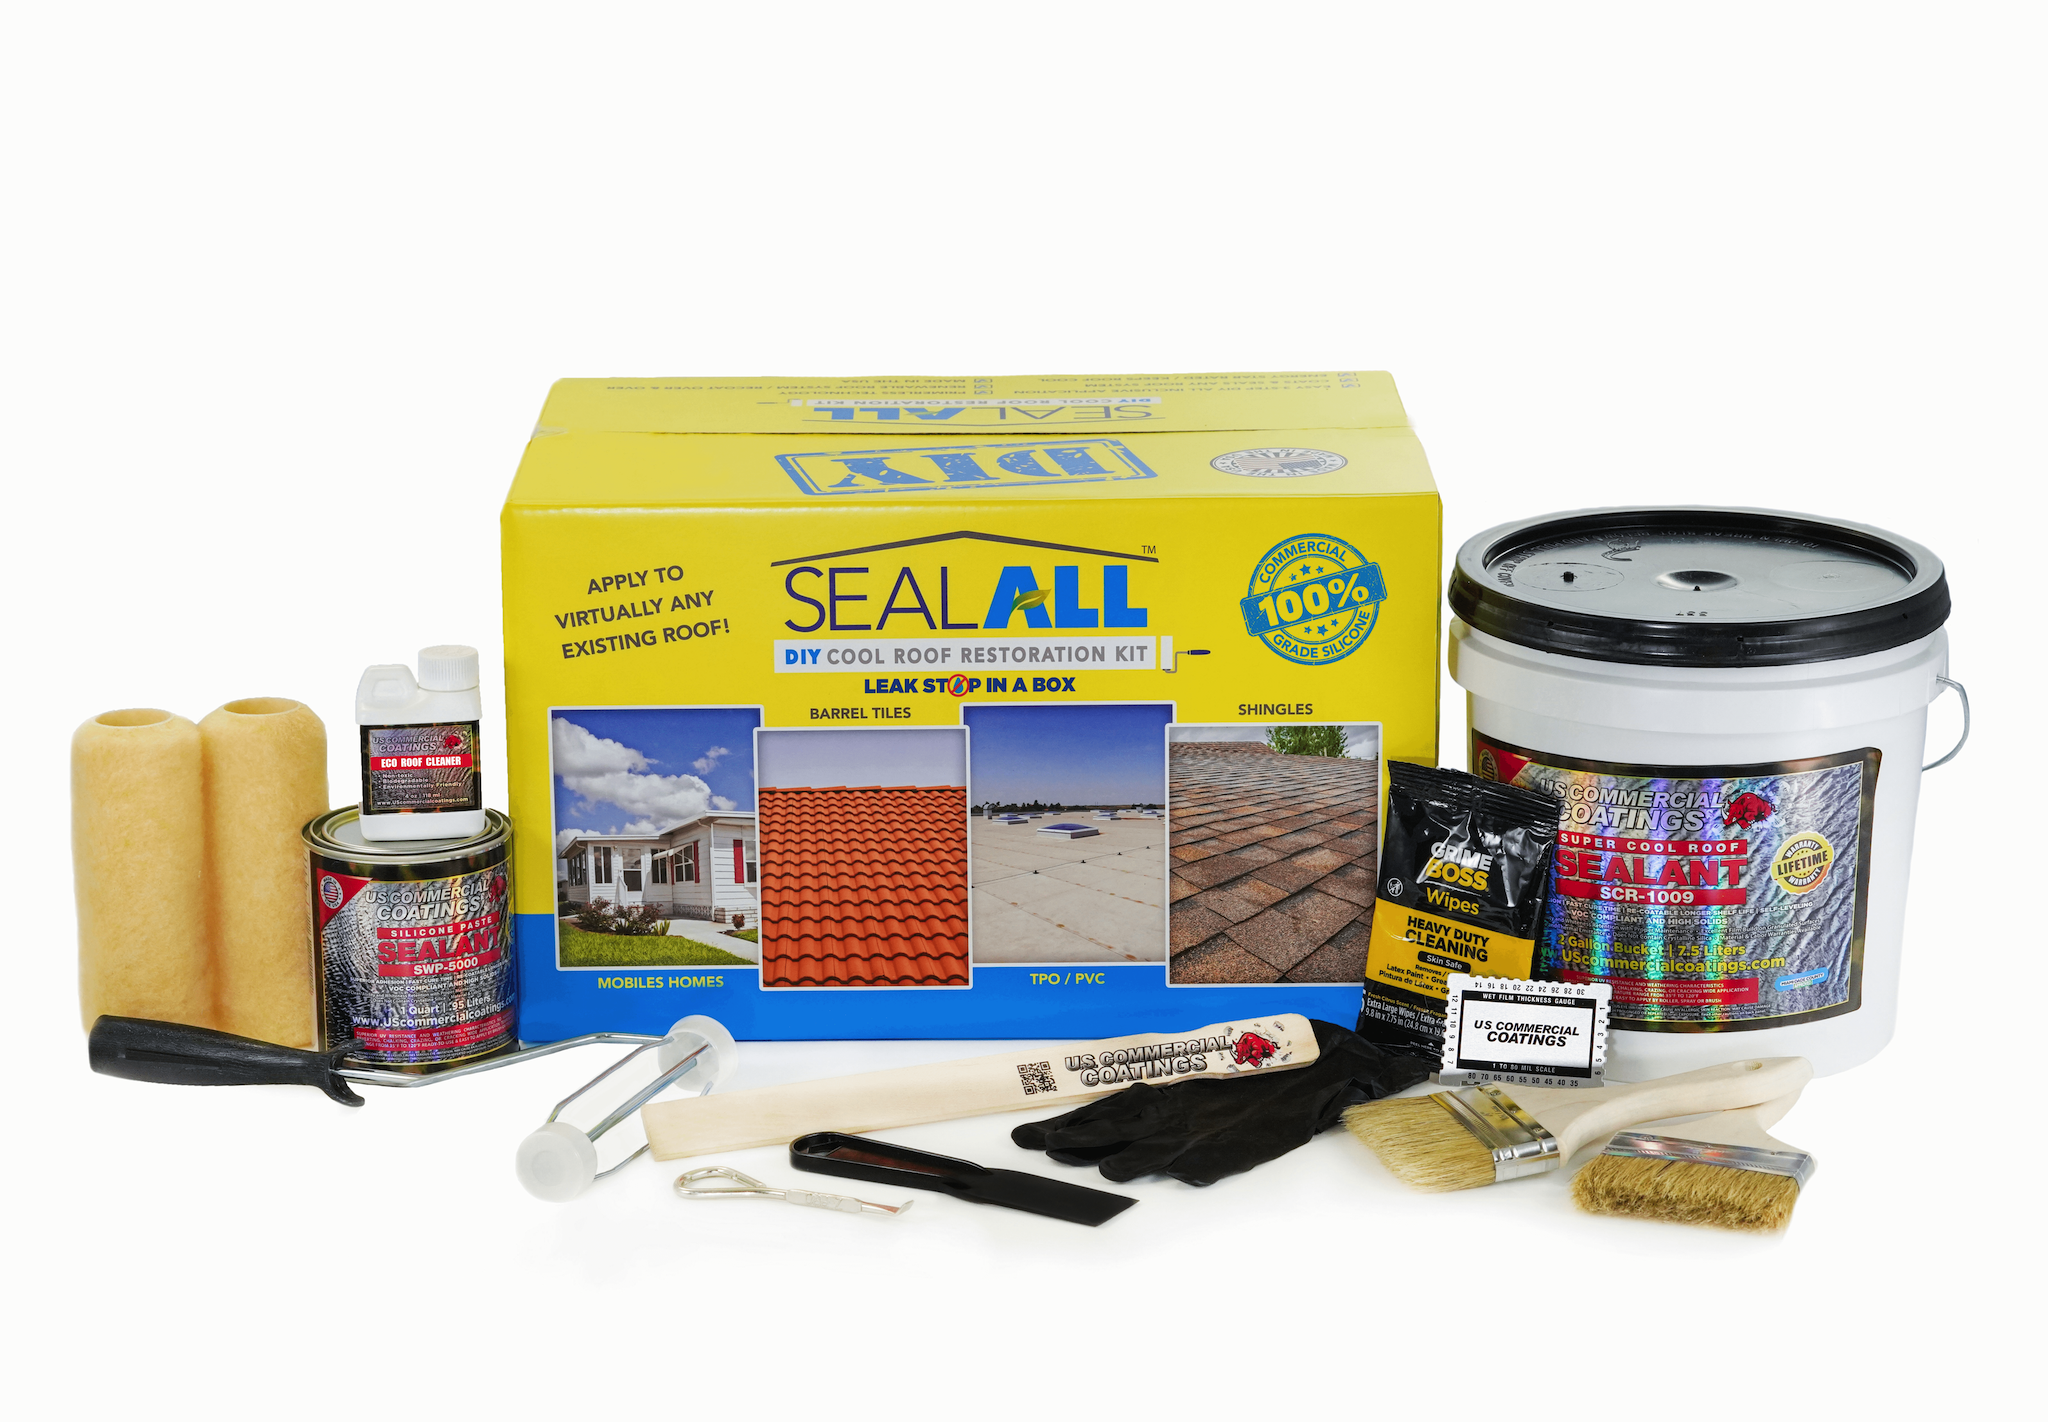 Buy Seal All - DIY Cool Roof Restoration Kit Online